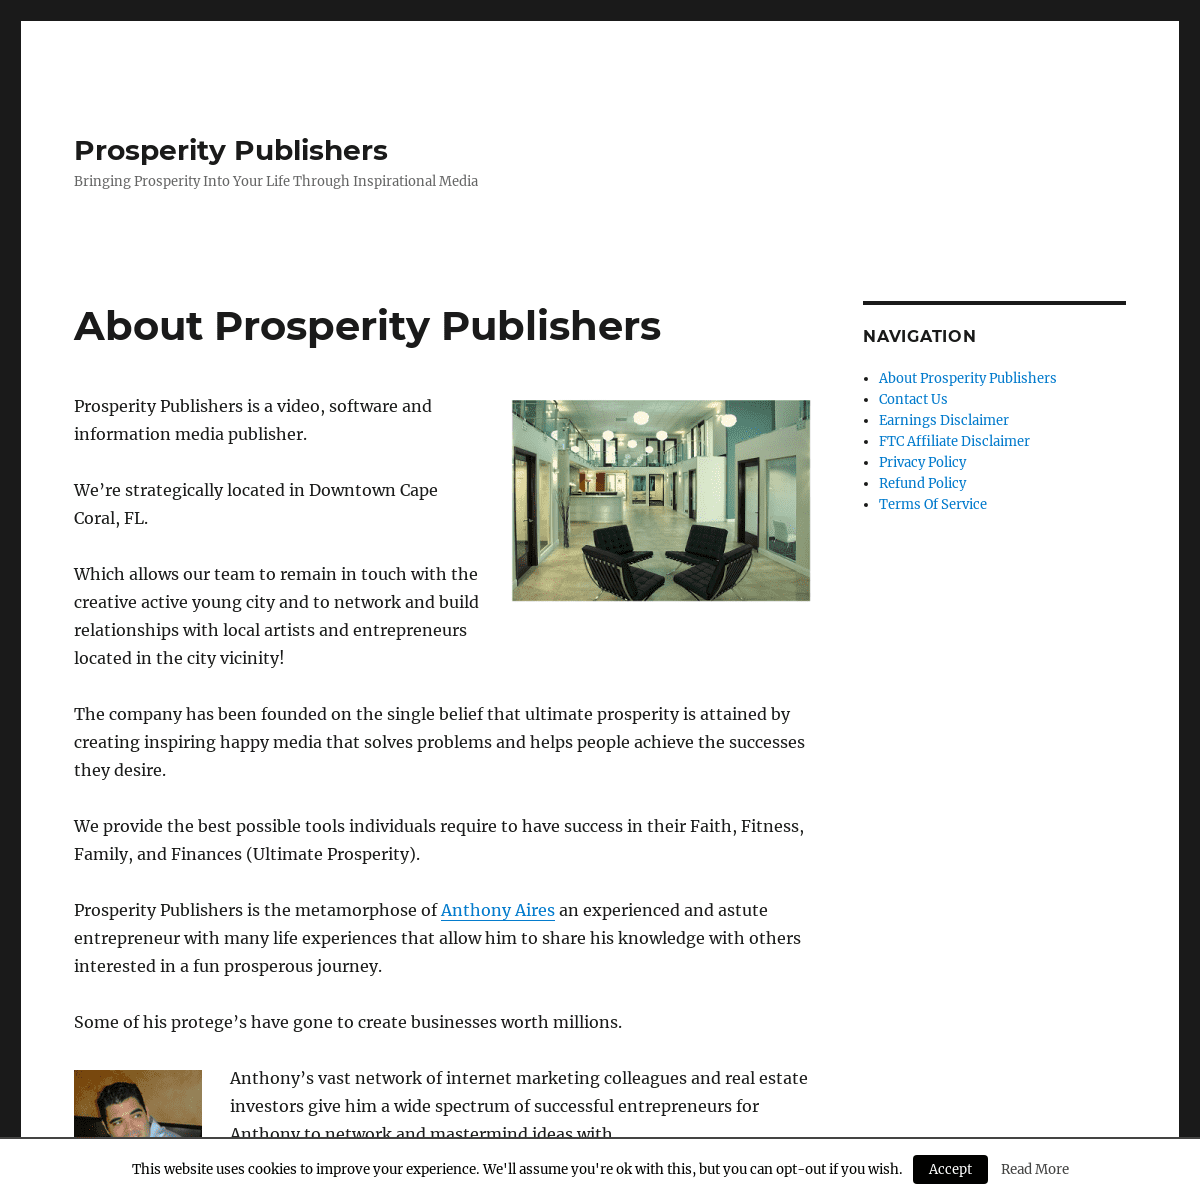 A complete backup of prosperitypublishers.com